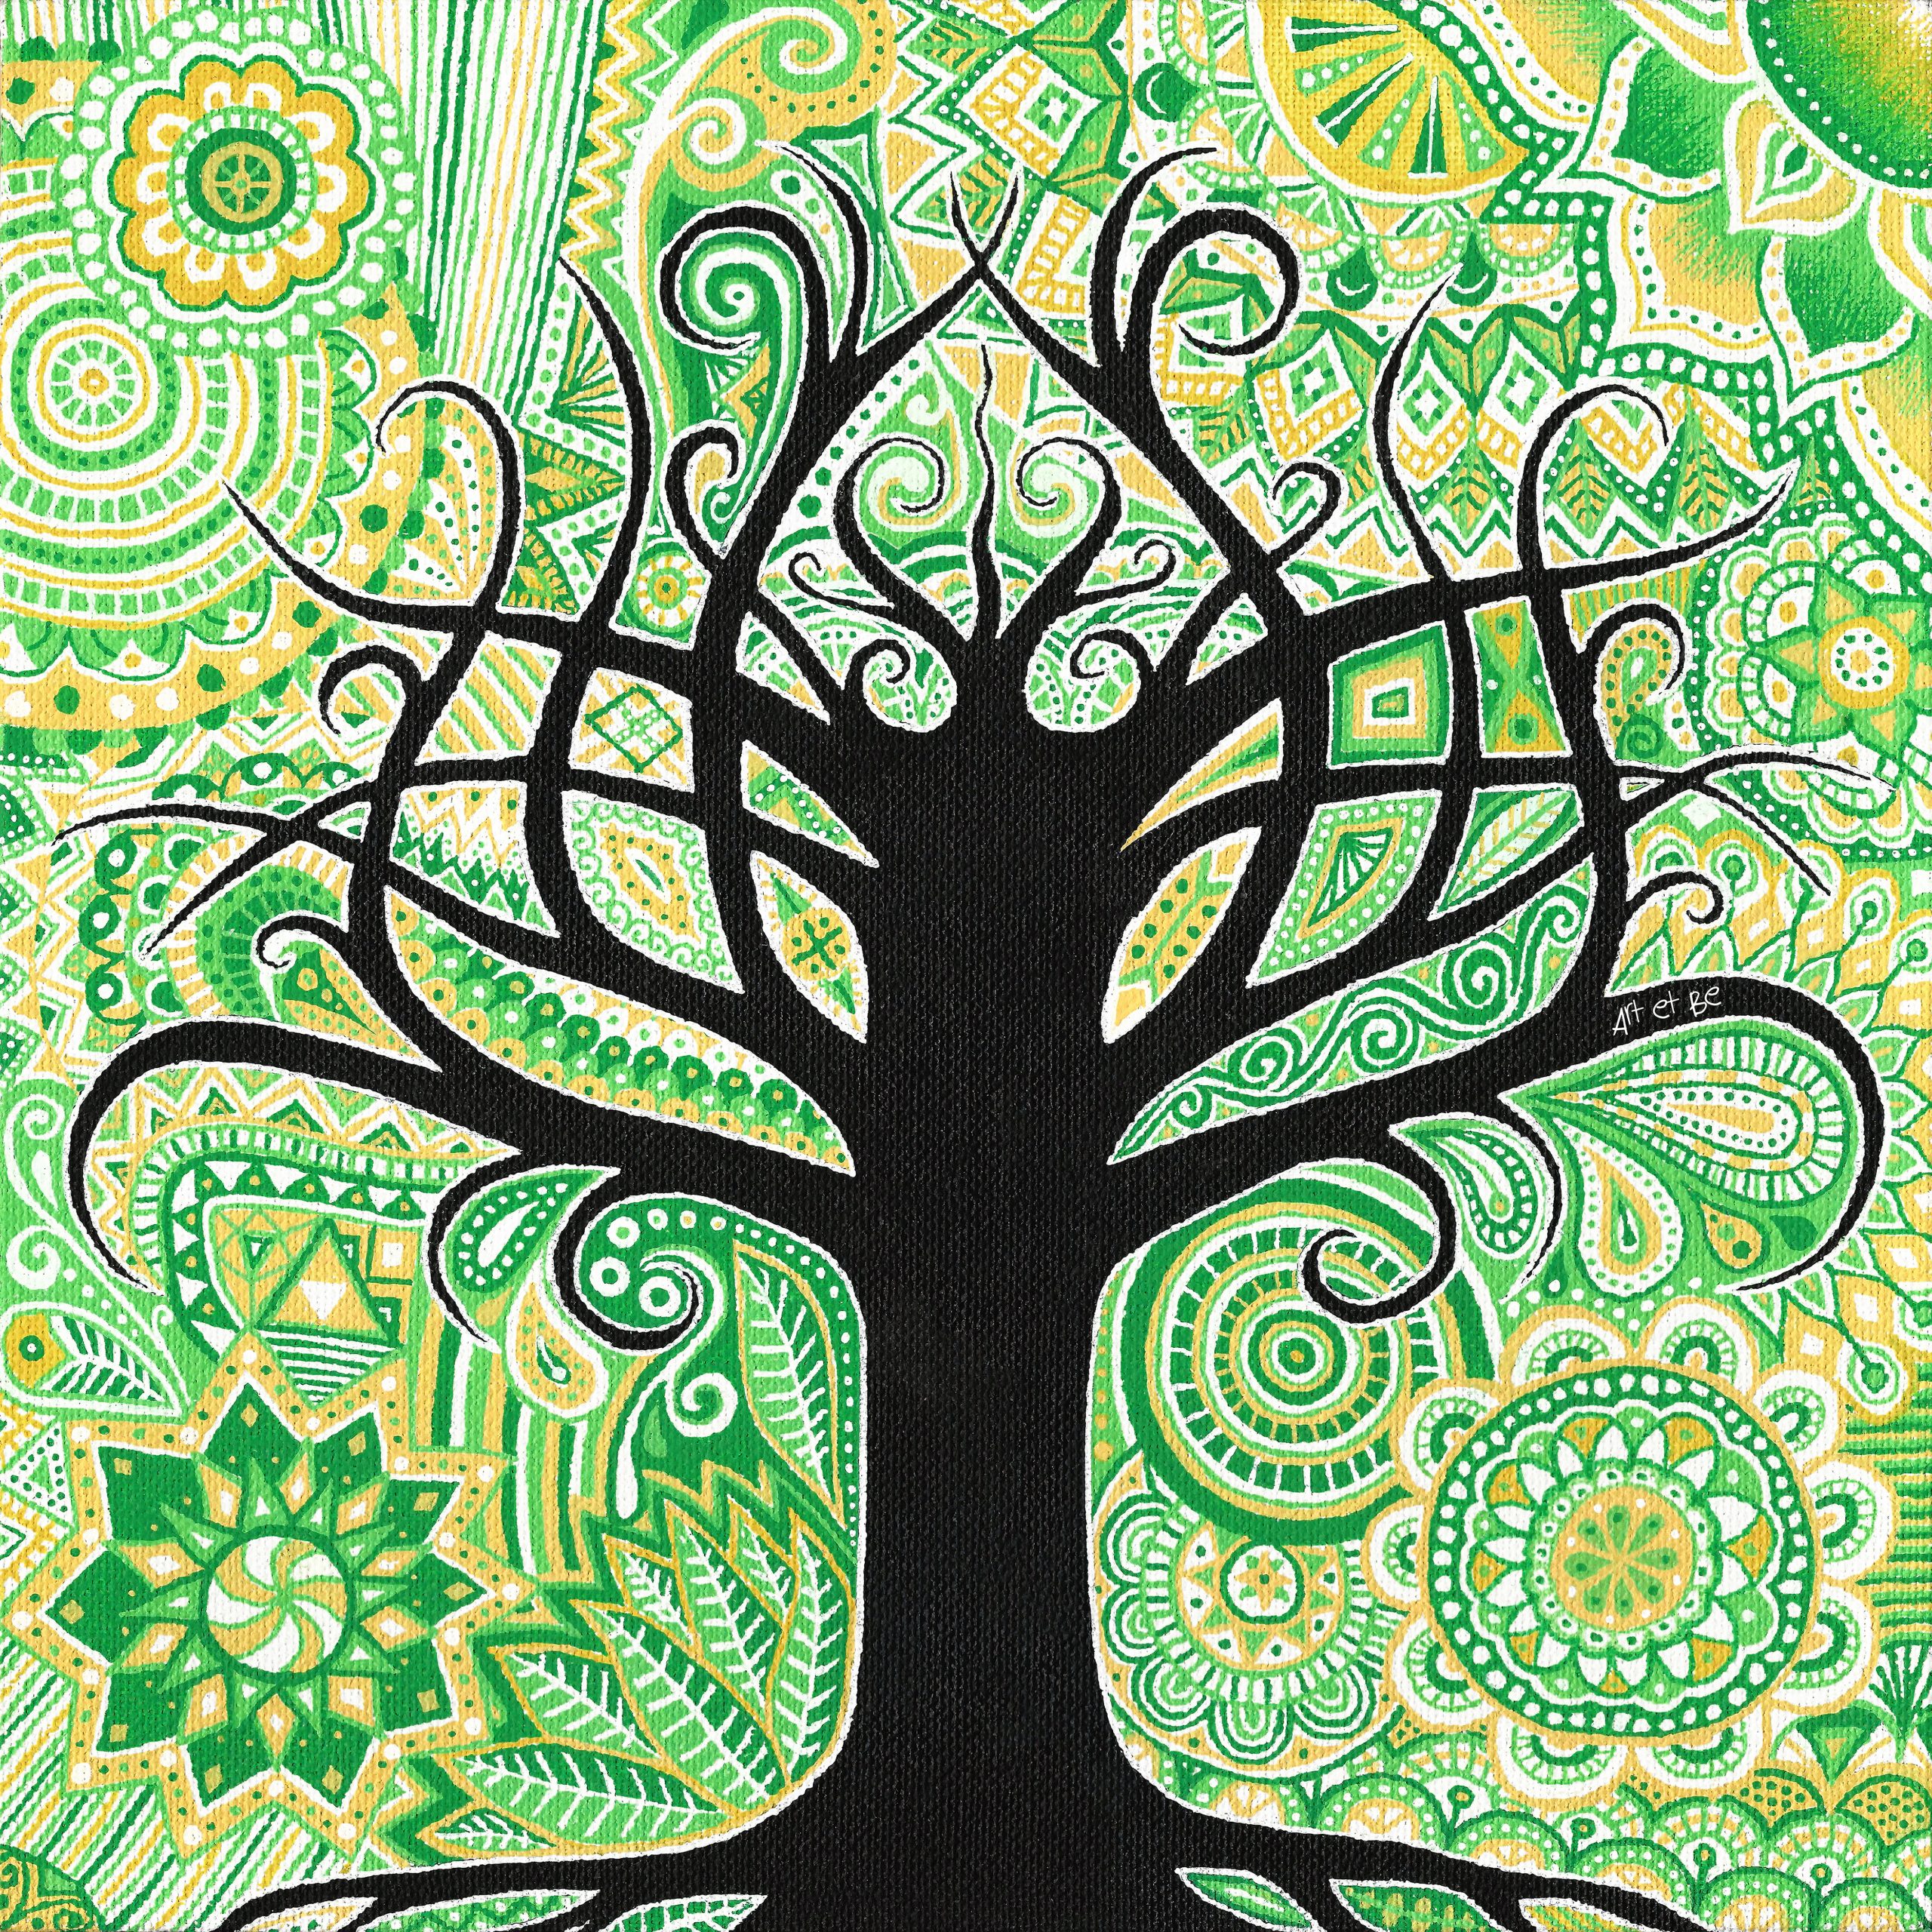 Рано дерево жизни. "Tree of Life" ("дерево жизни") by degree. Jsab Tree of Life. Усман дерево жизни. Картина дерево жизни в интерьере.